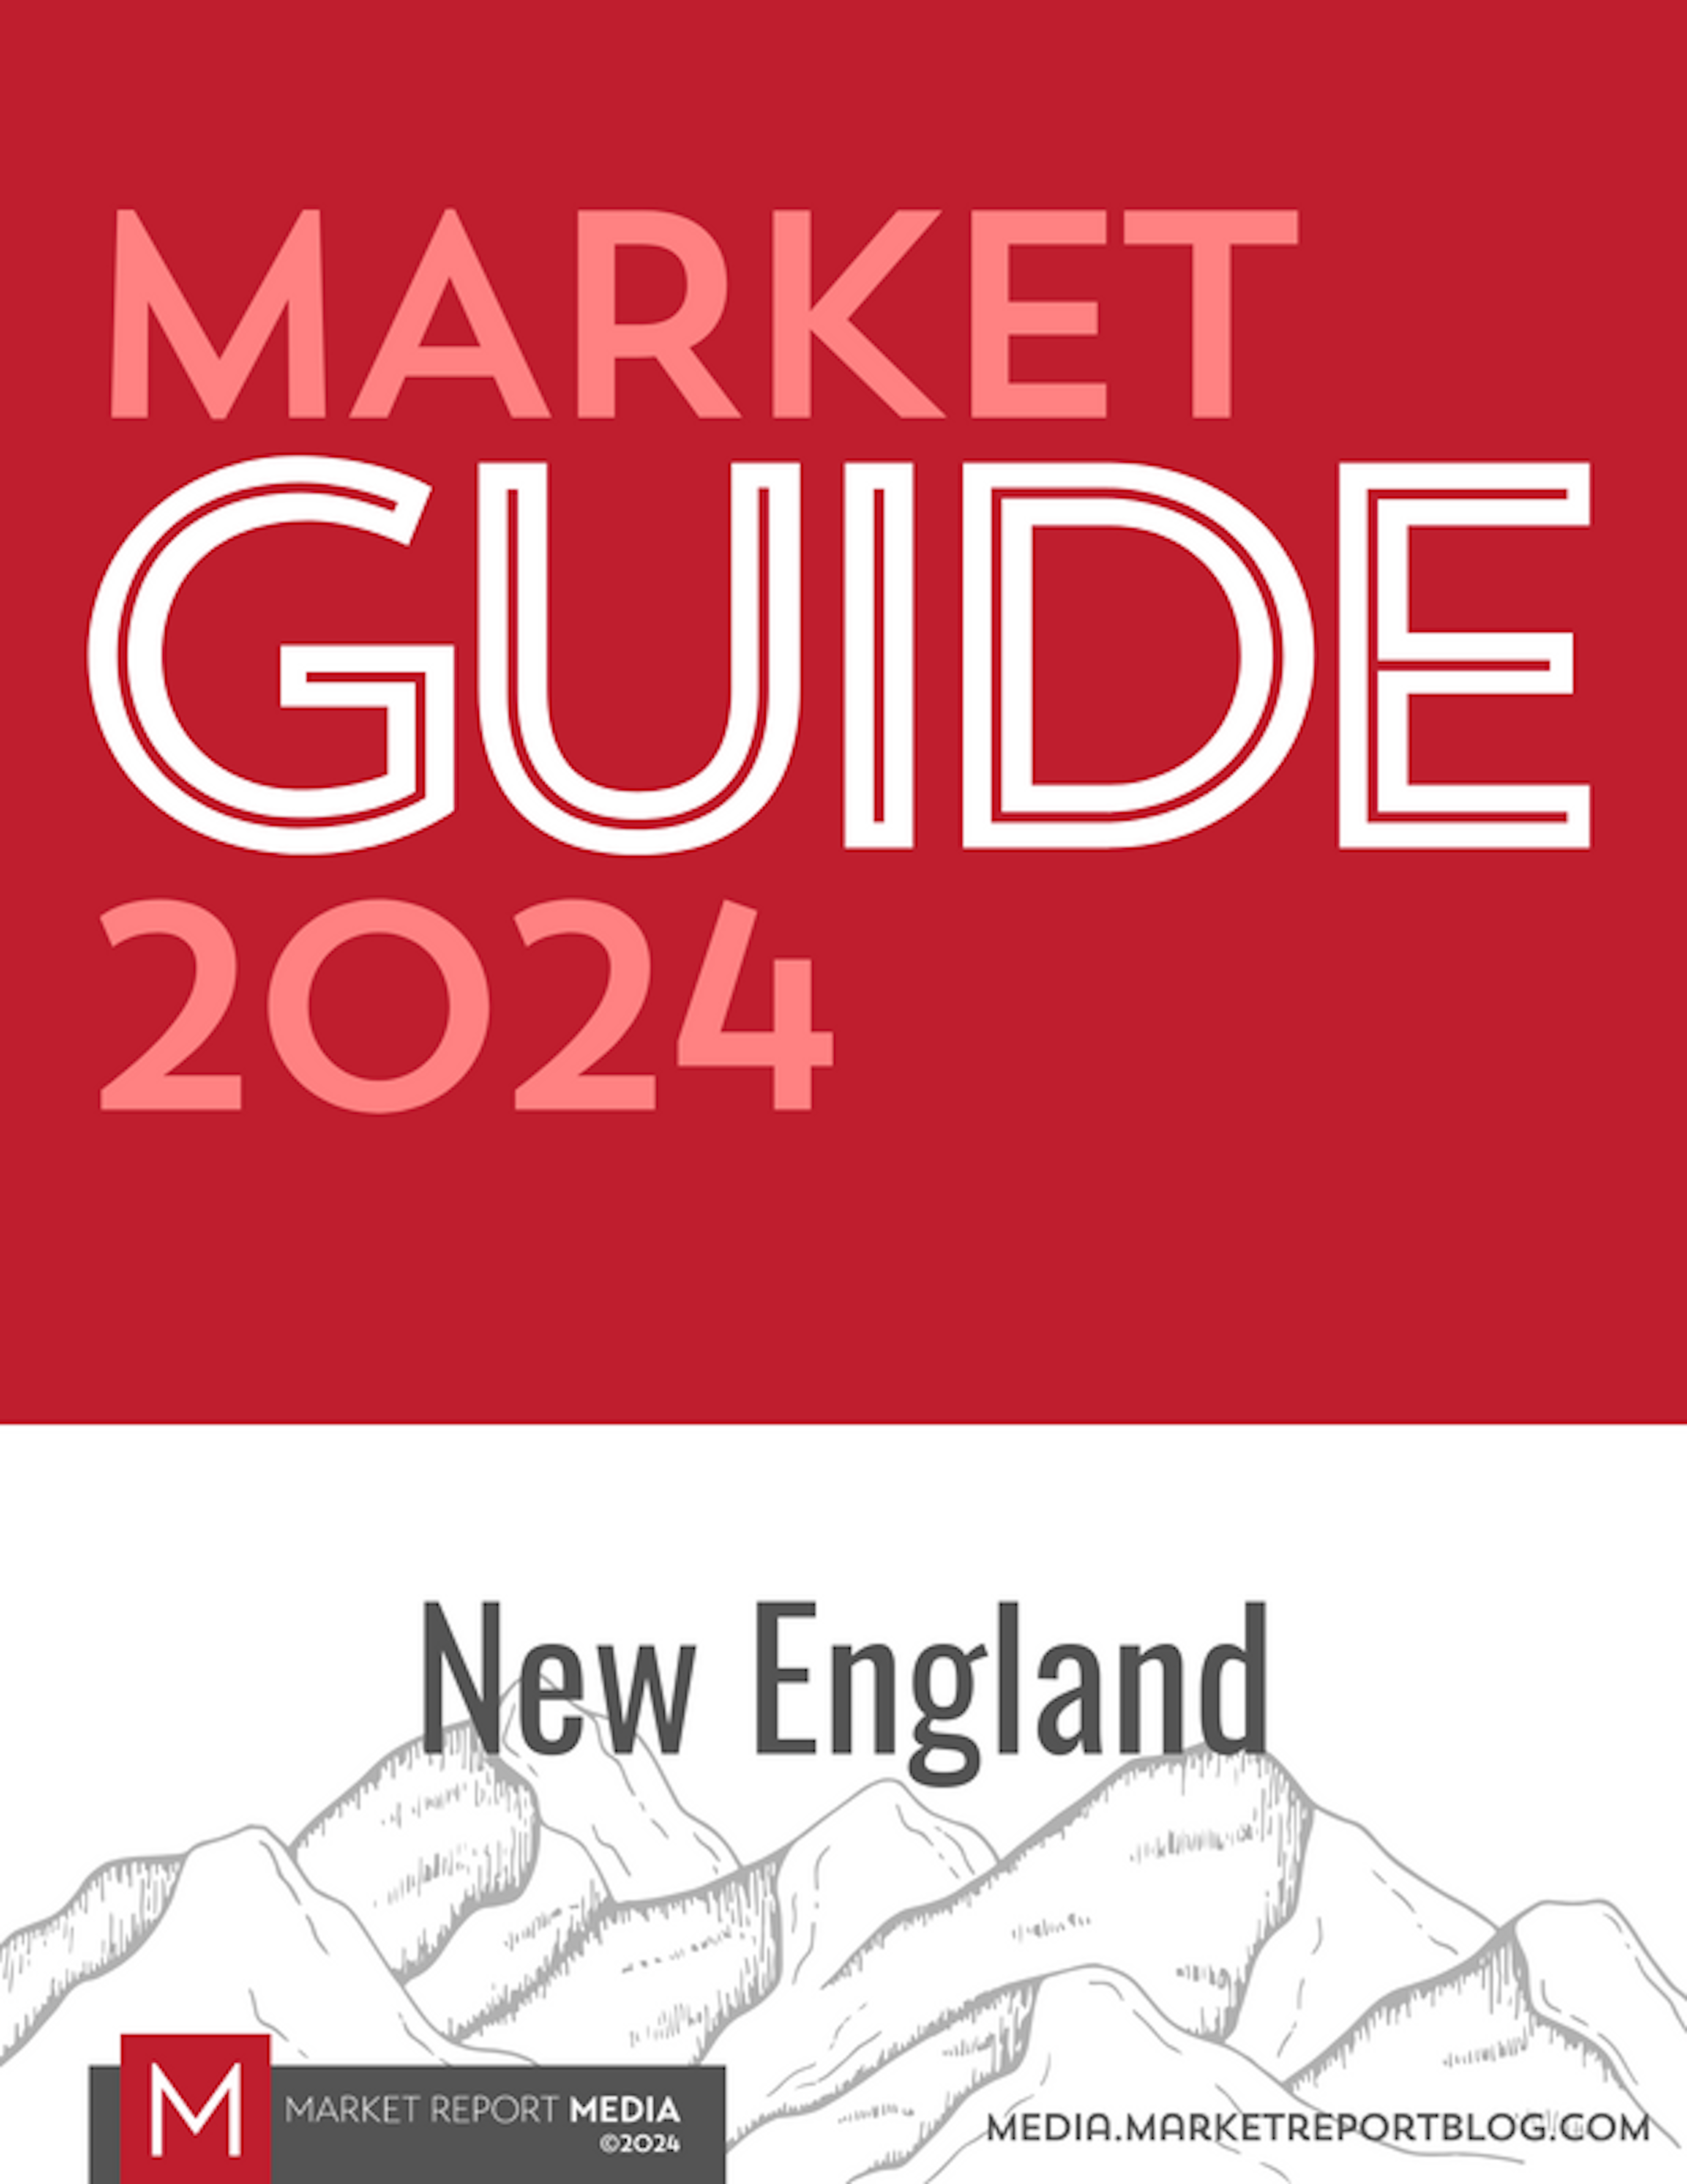 Market Guide 2024 - New England